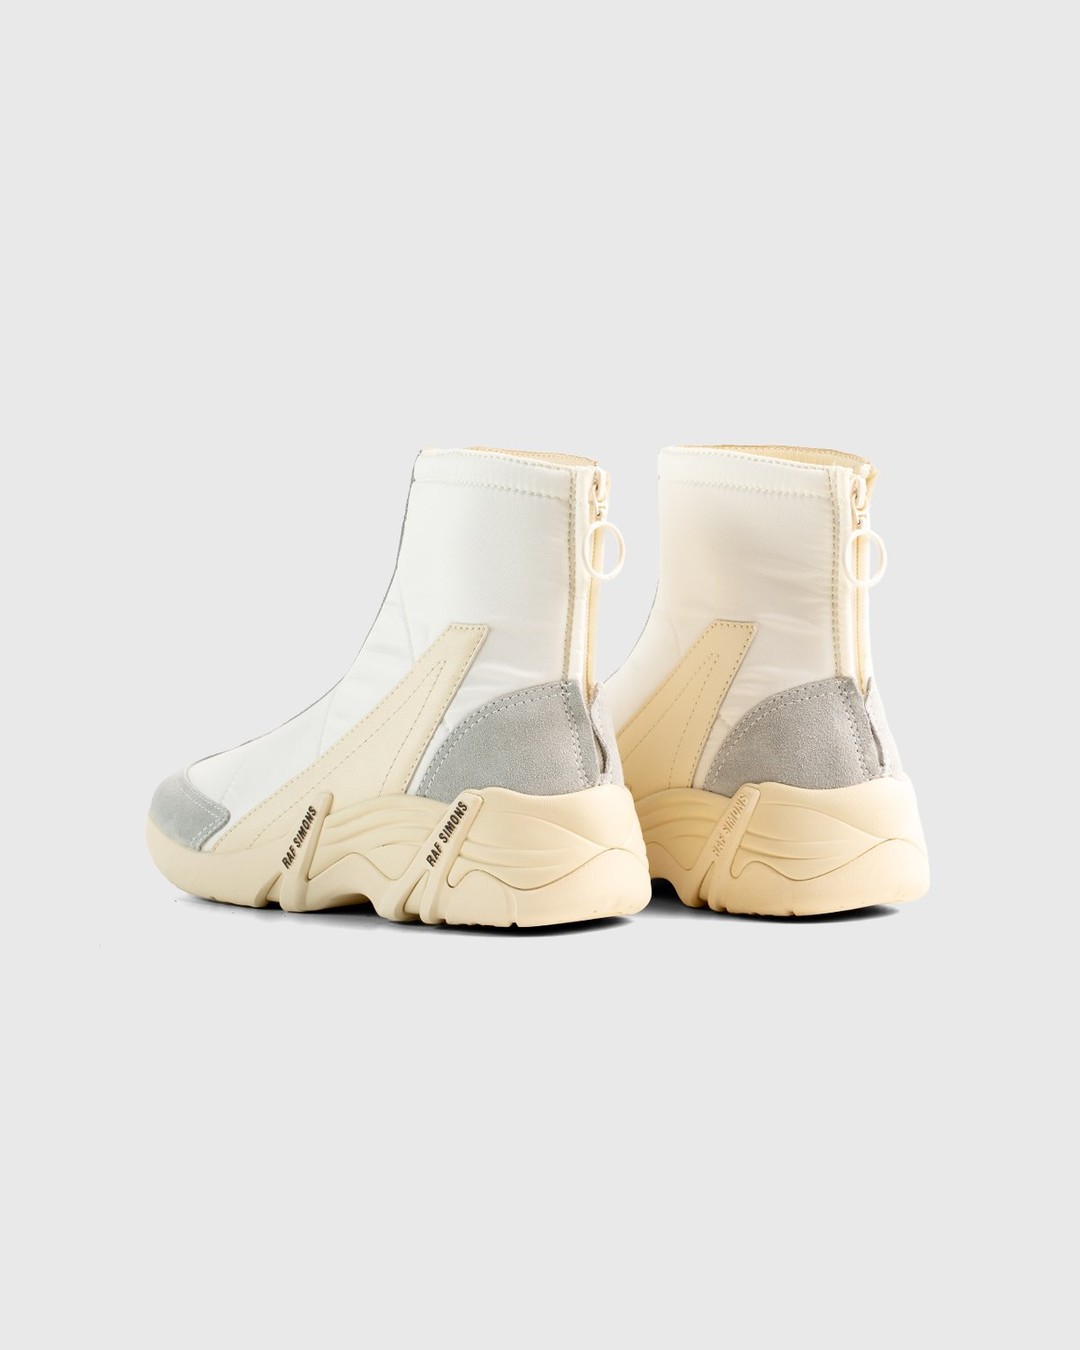 Raf Simons – Cylon 22 Cream - Sneakers - Beige - Image 3